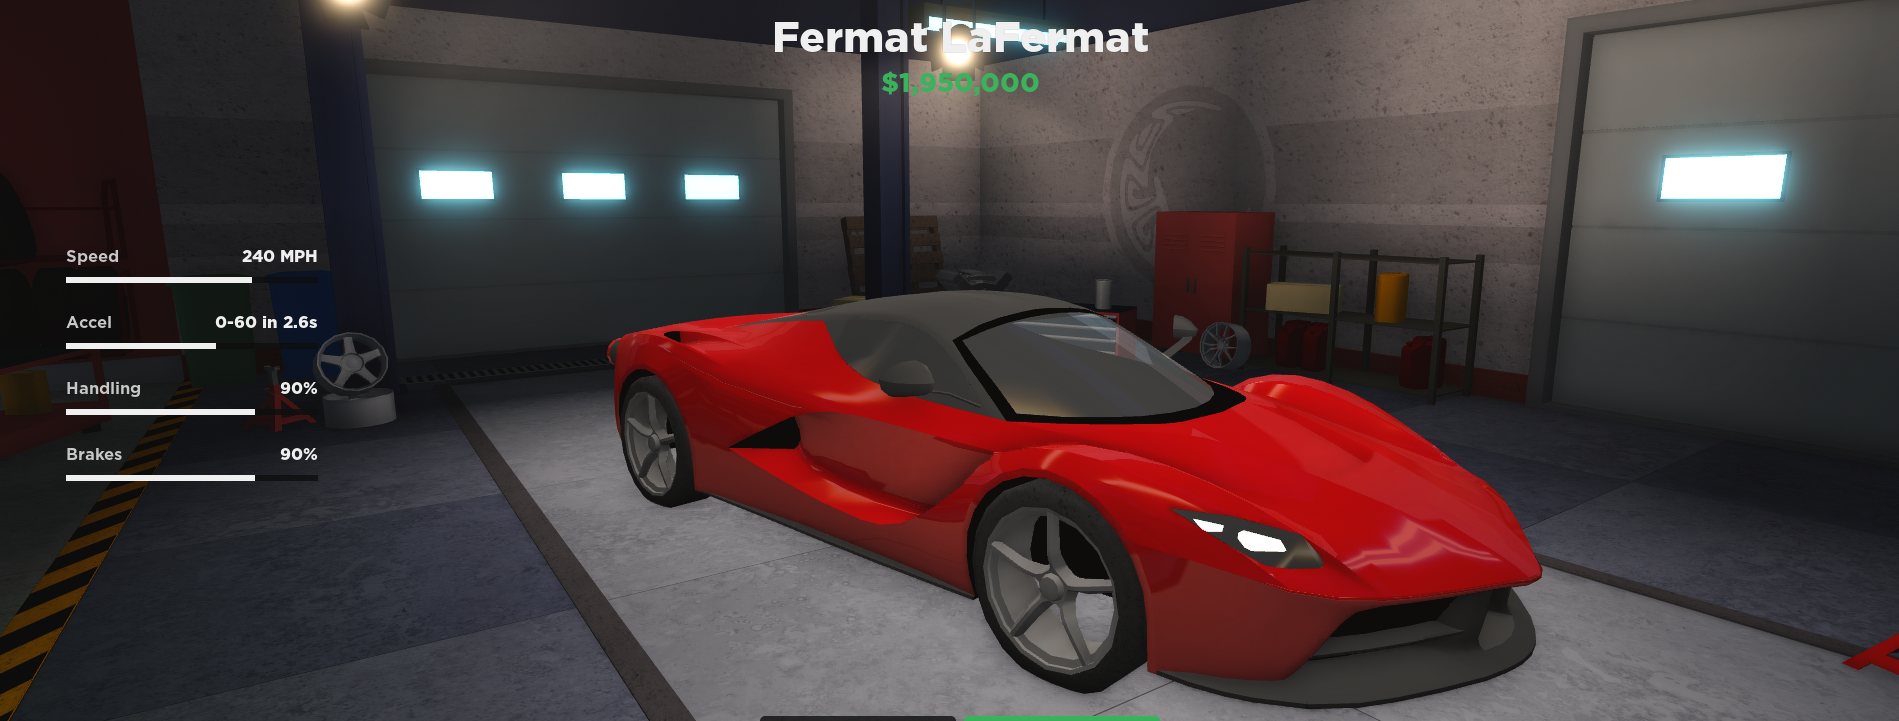 Fermat LaFermat, Driving Simulator Wiki